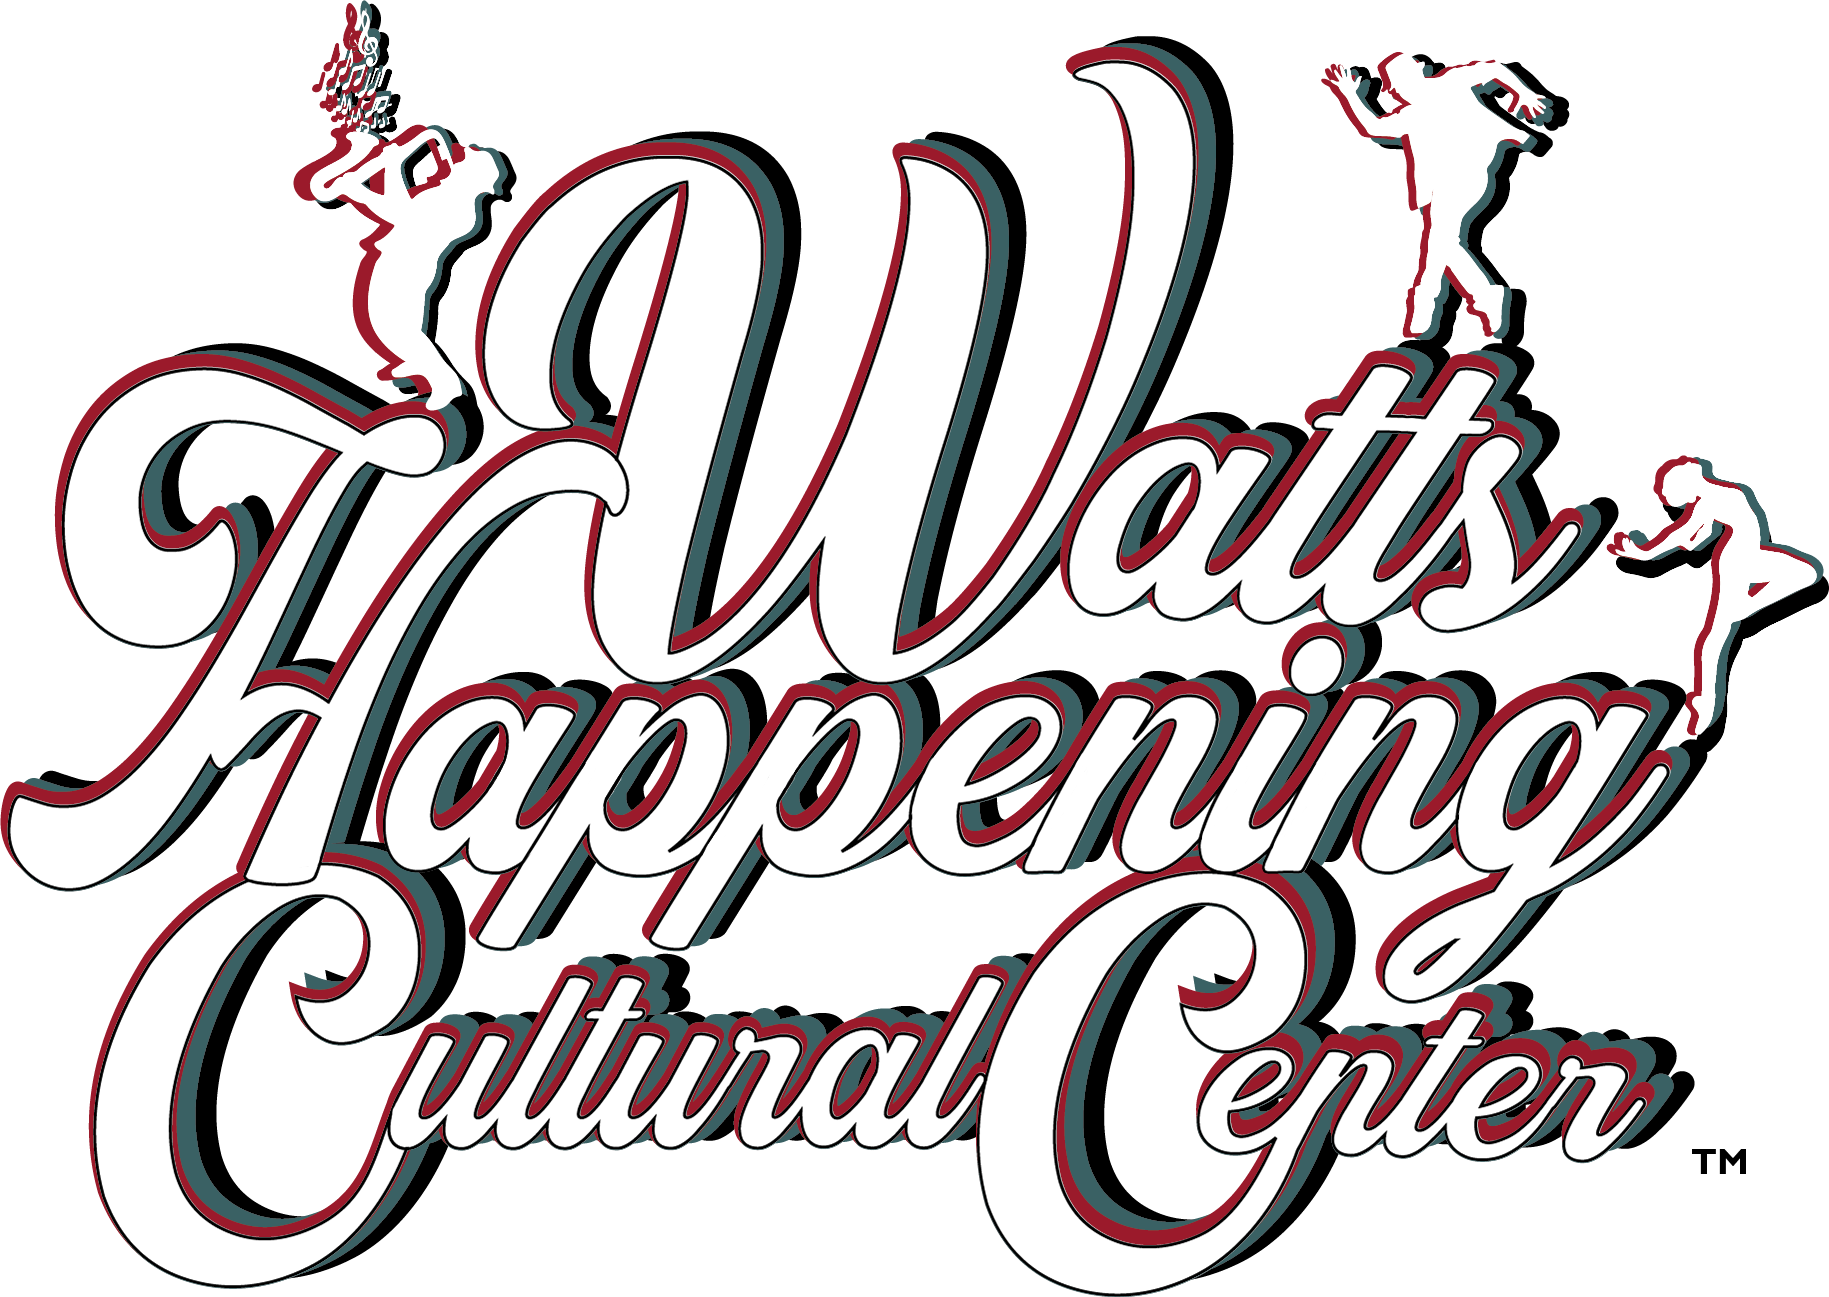 Watts Happening Cultural Center Logo